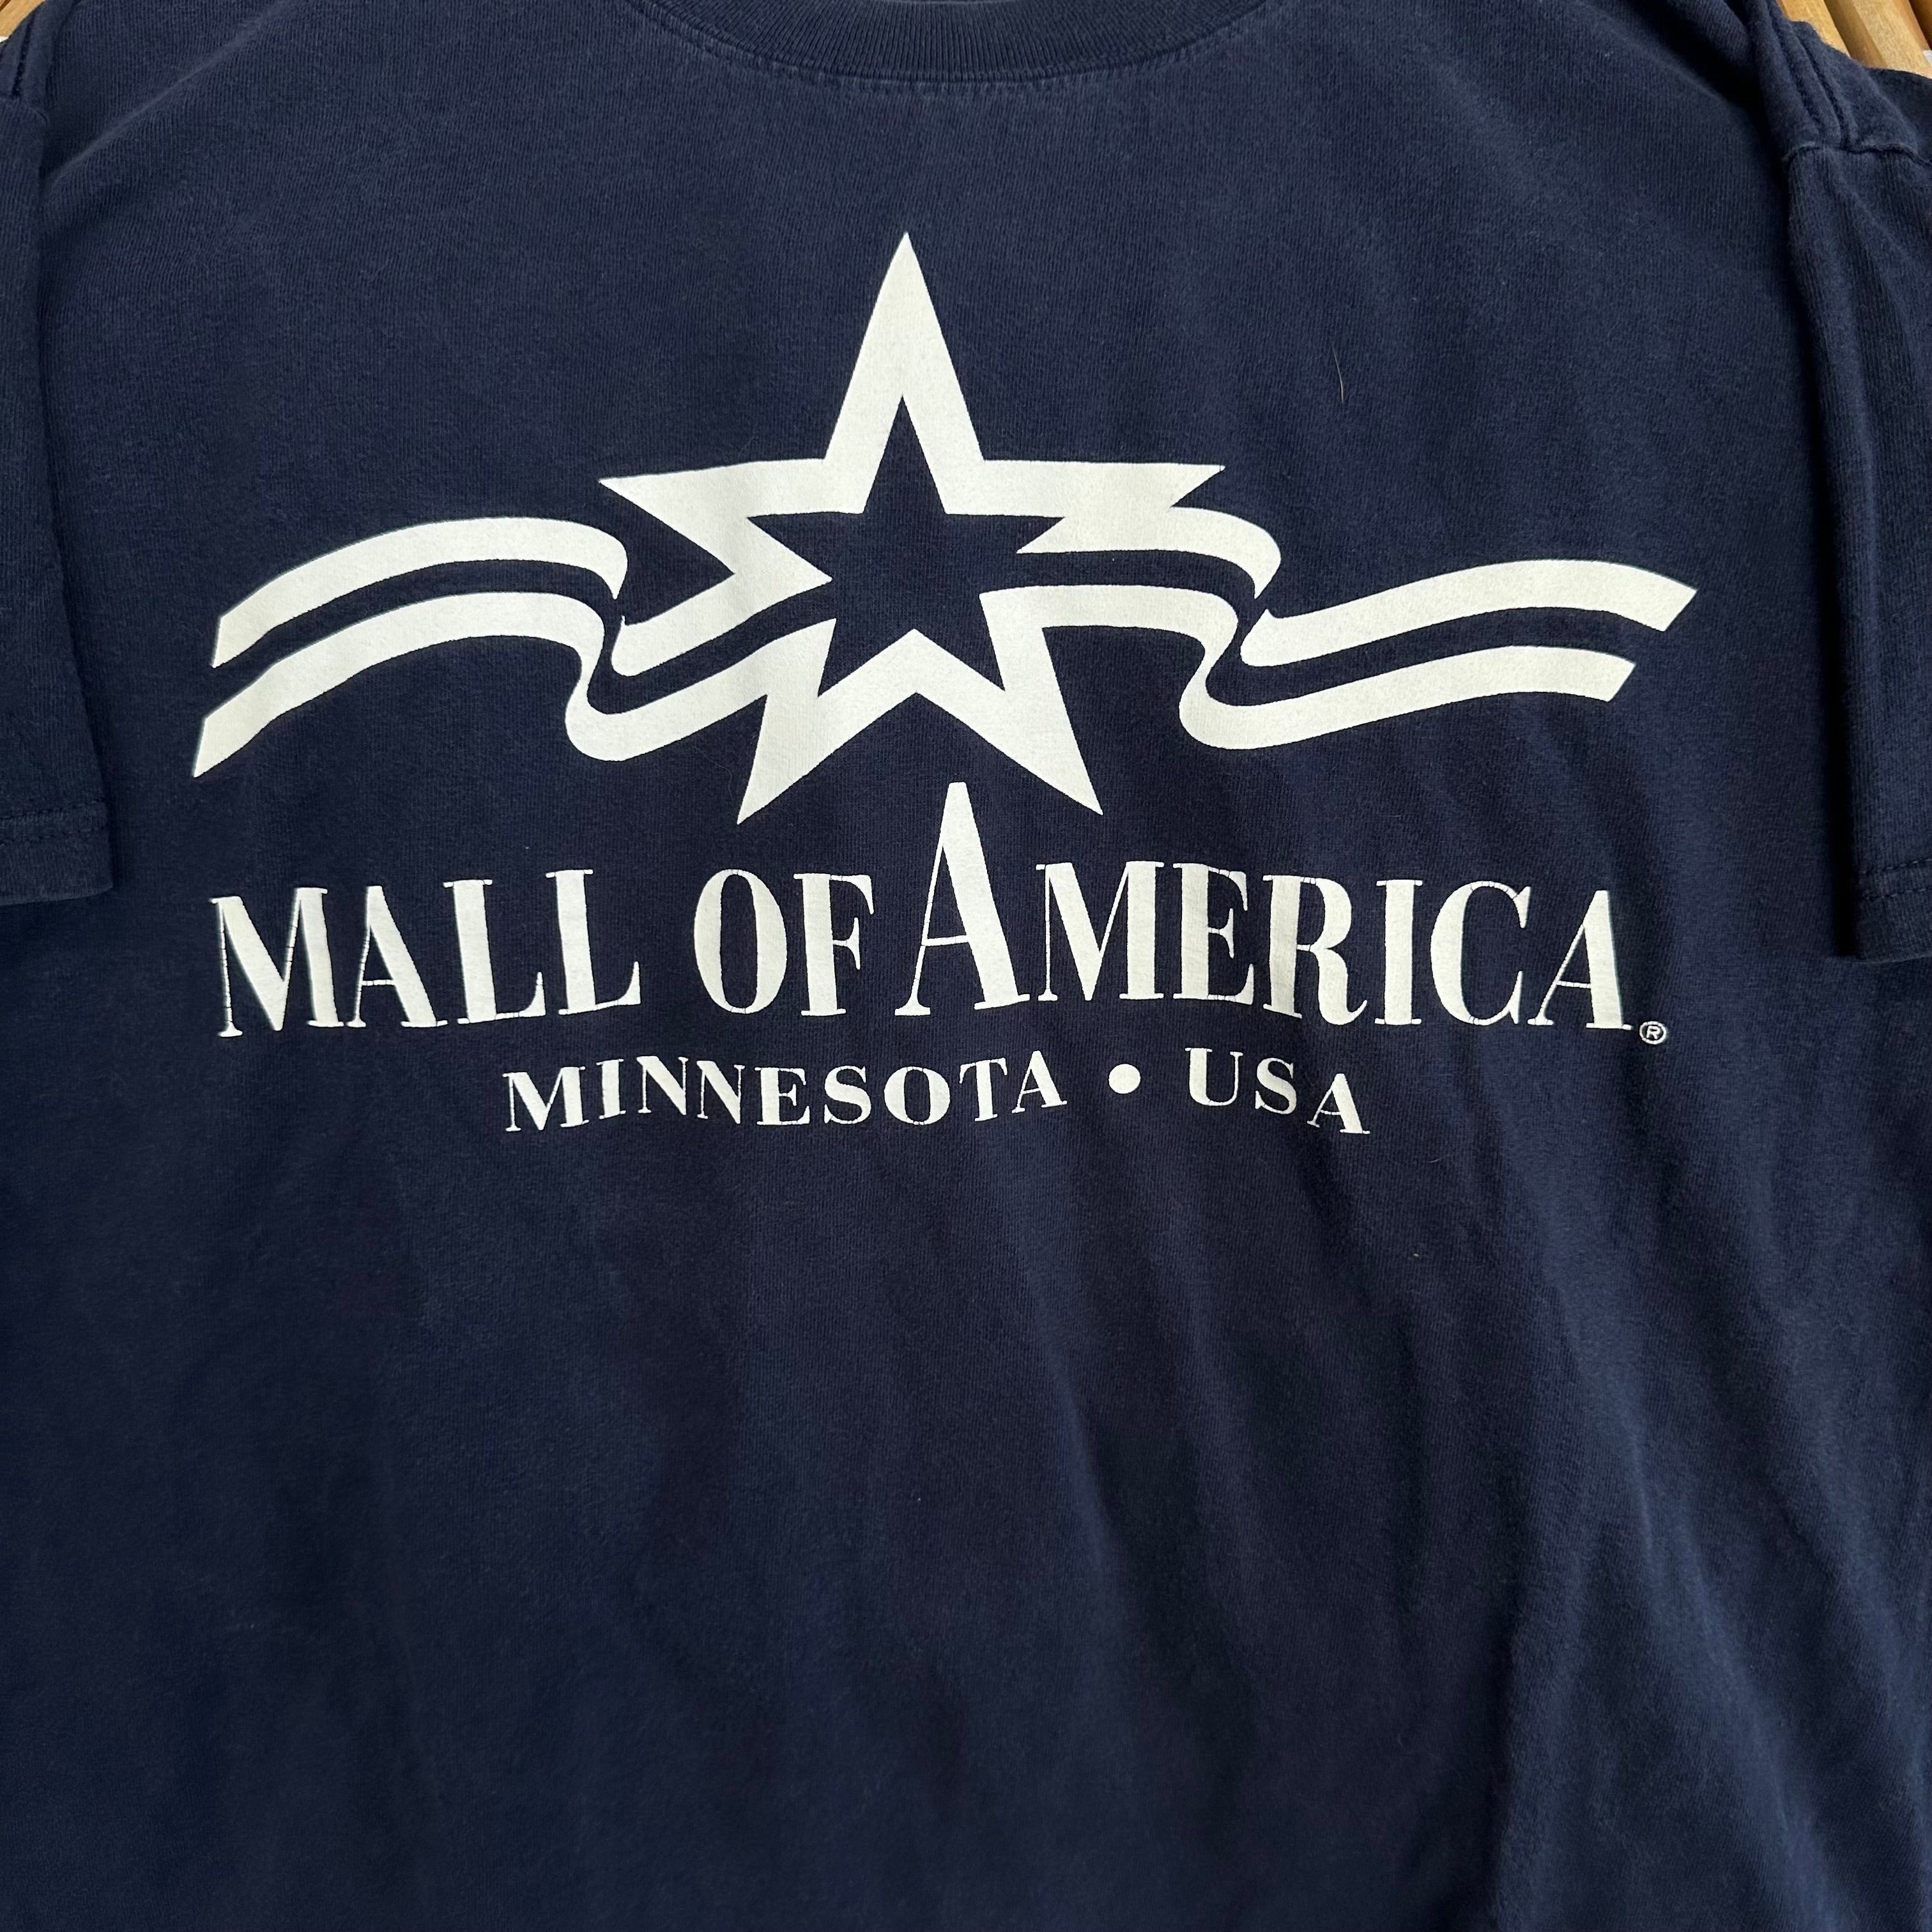 Mall of America Navy Blue T-Shirt